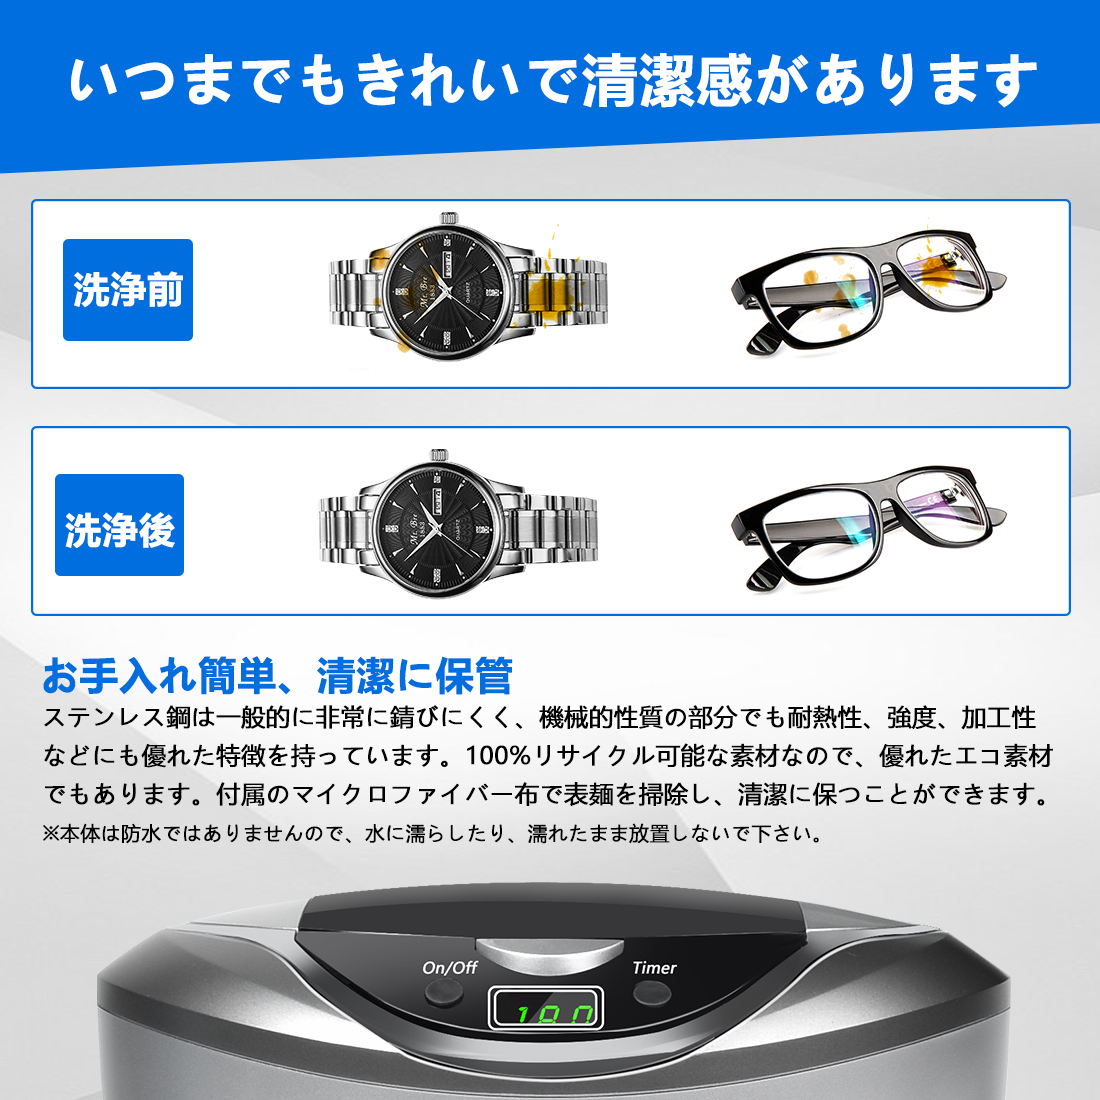 iimono / メガネ洗浄機 超音波クリーナー 眼鏡洗浄機 超音波洗浄器 5